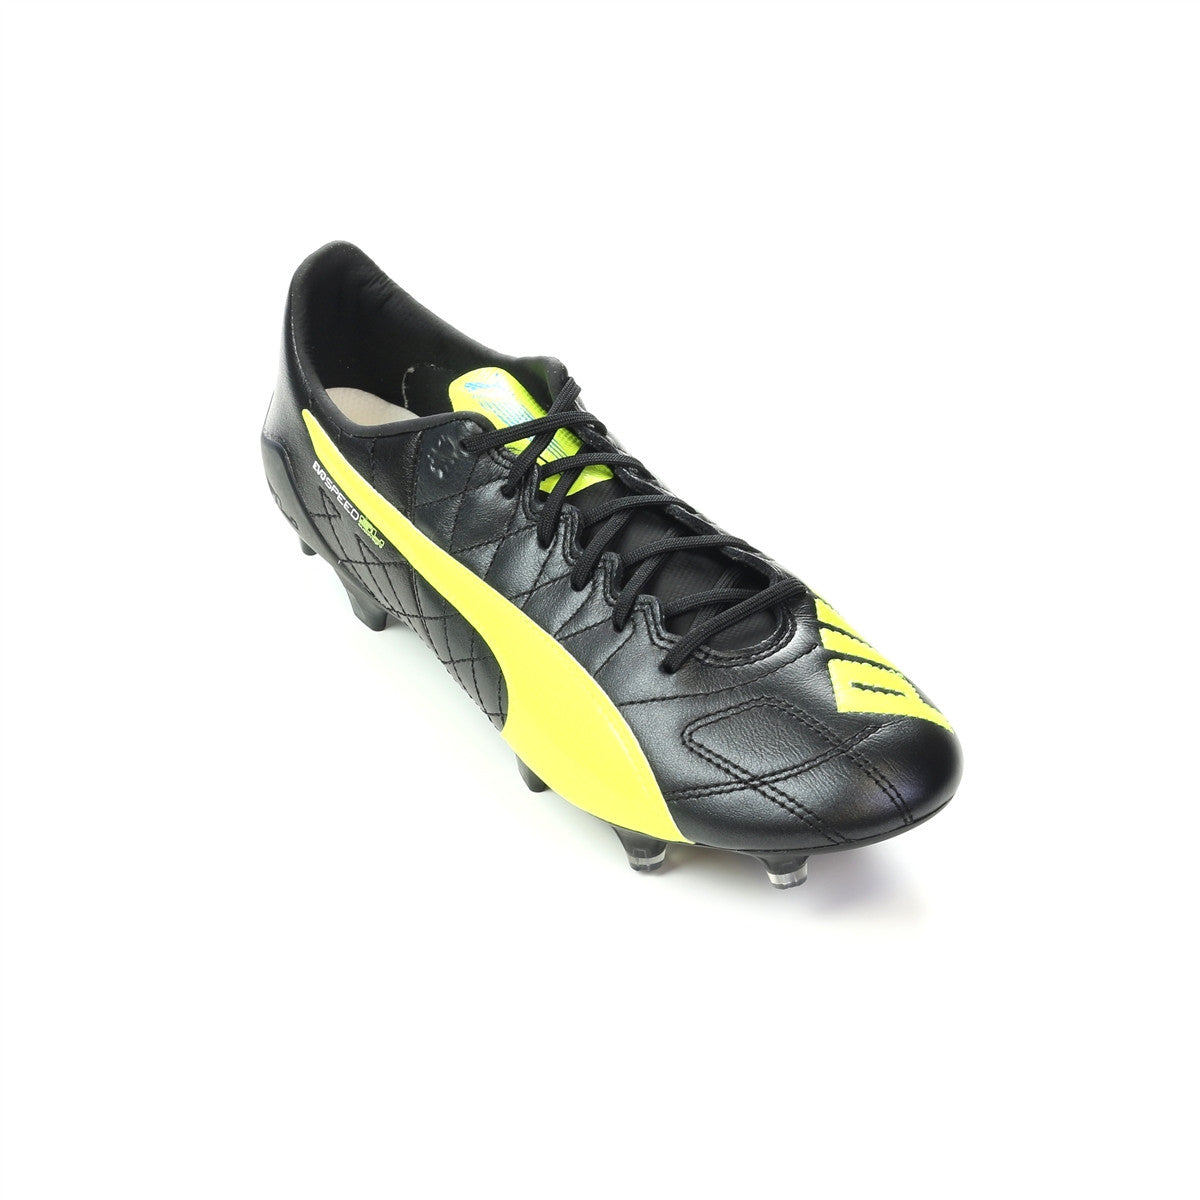 Puma evoSPEED SL LTH FG cuir soccer cleats black yellow lv2